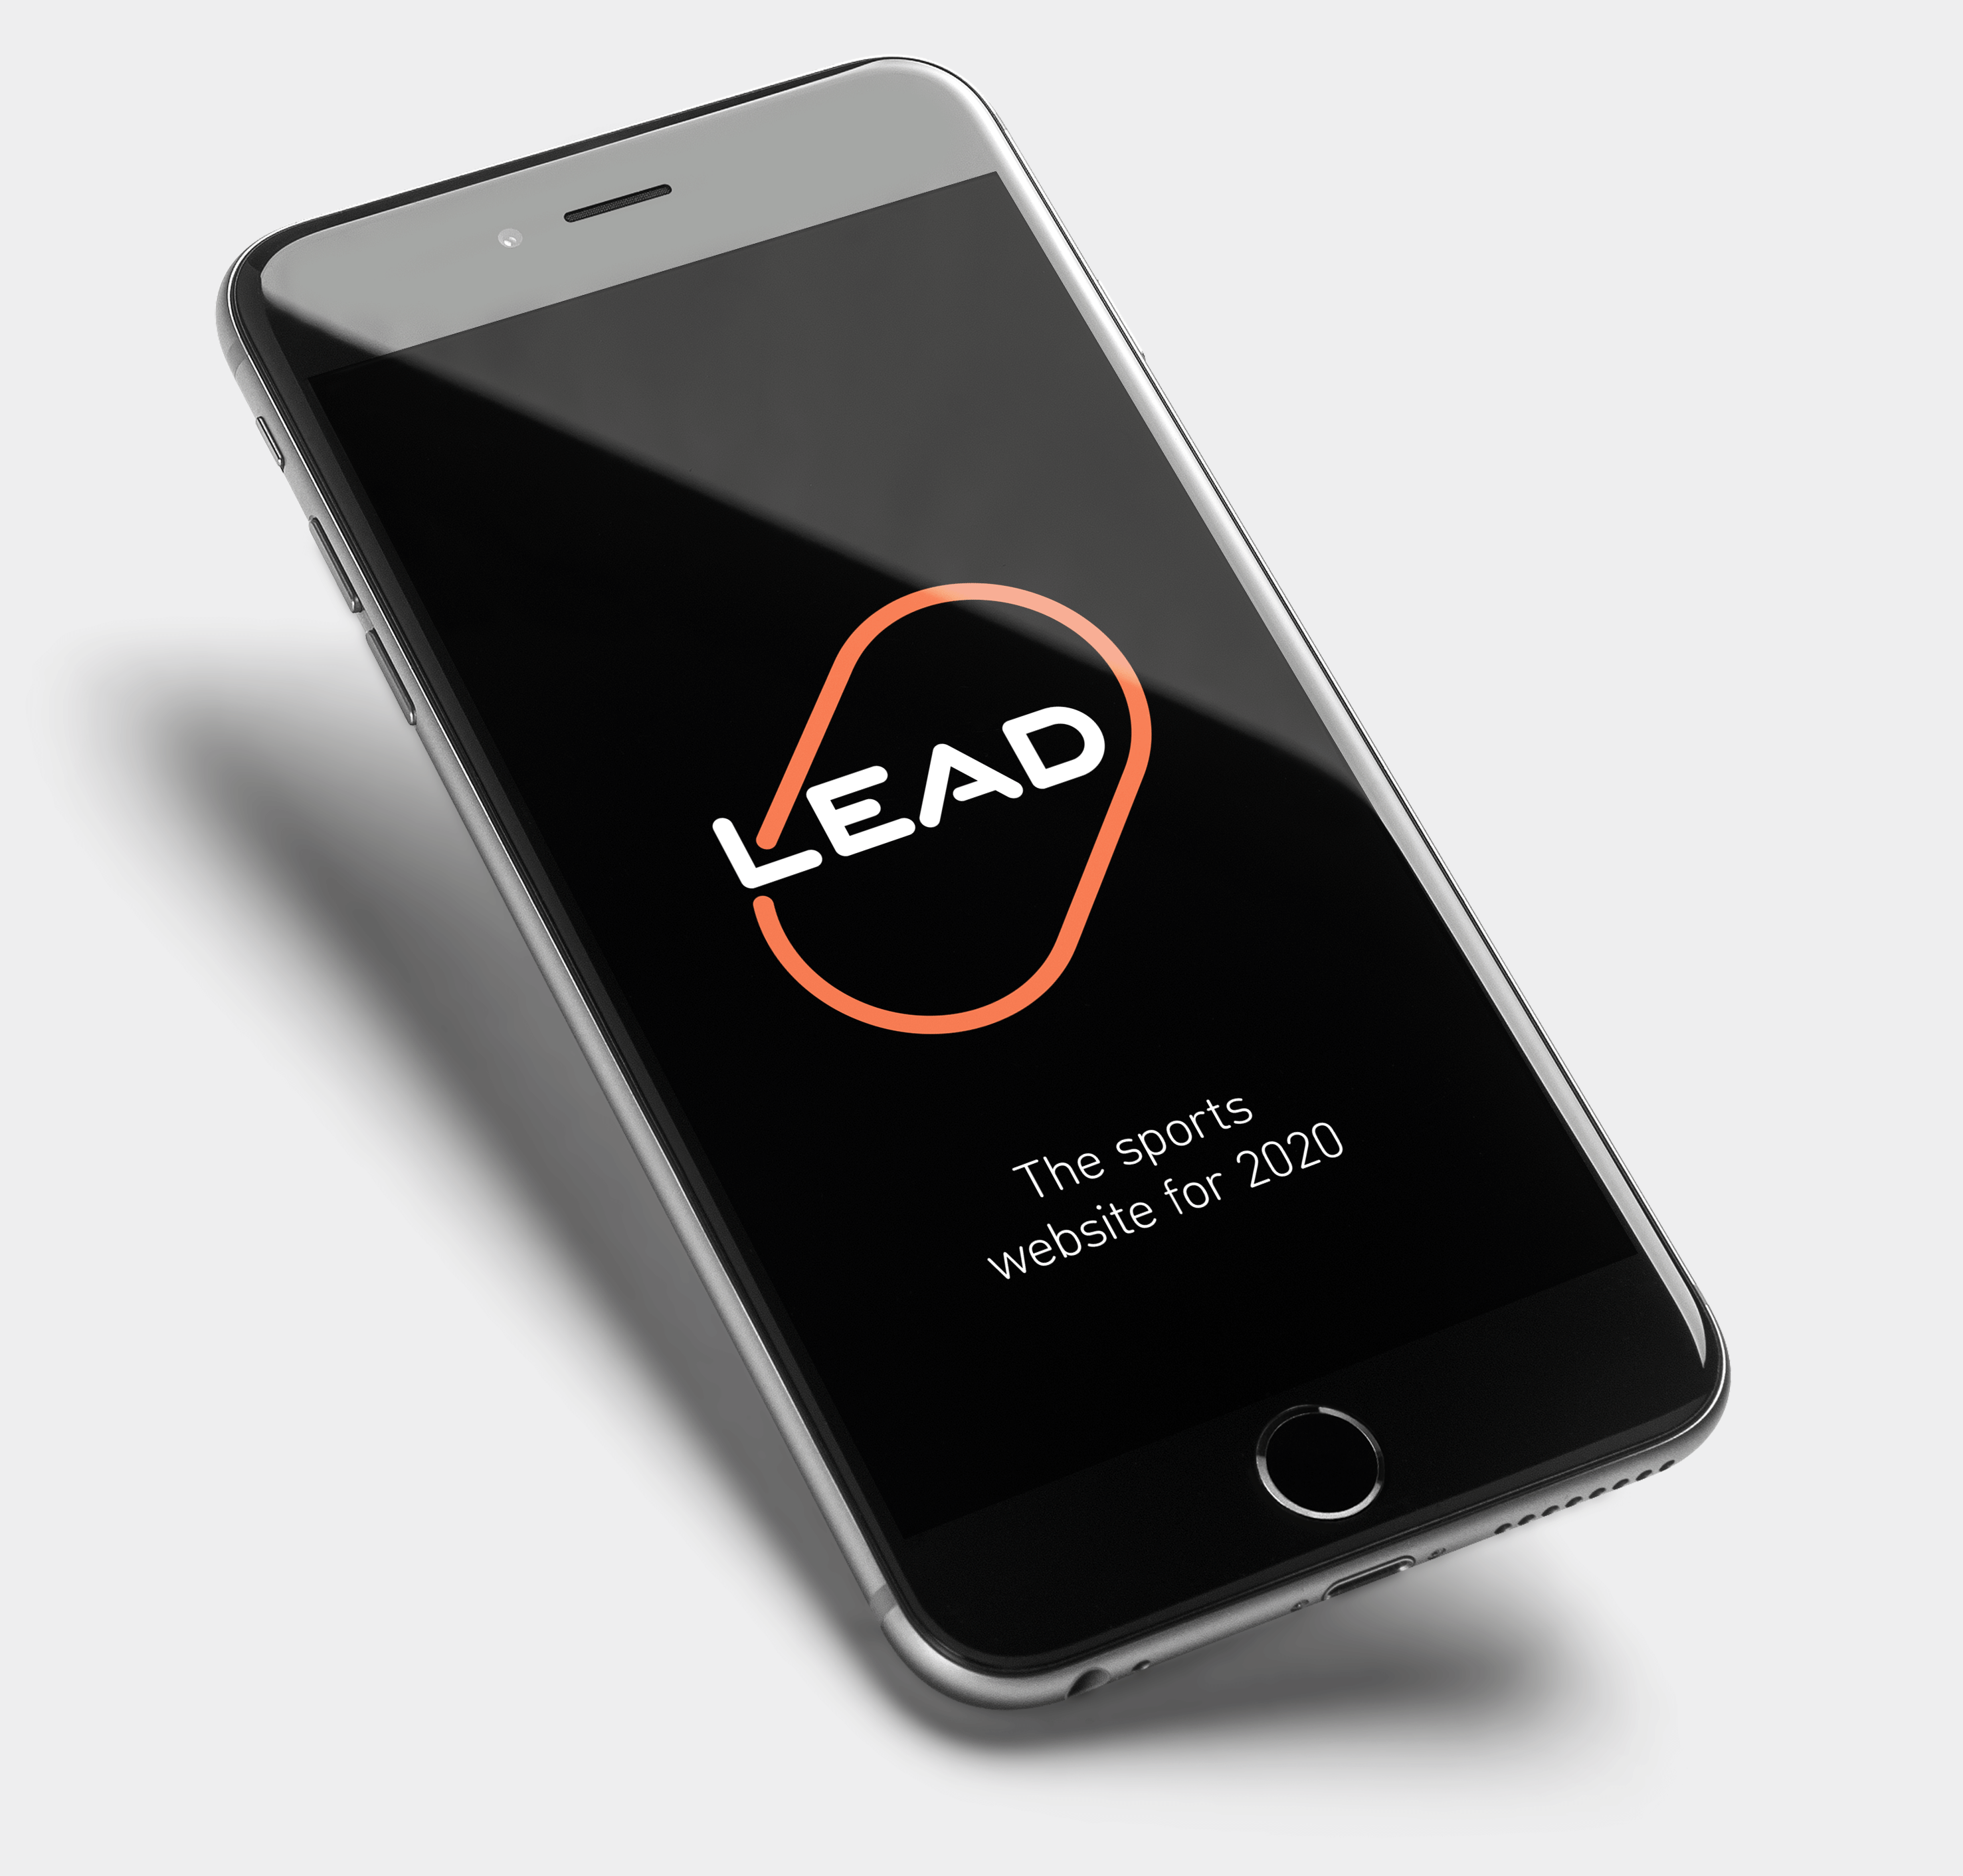 Lead phone